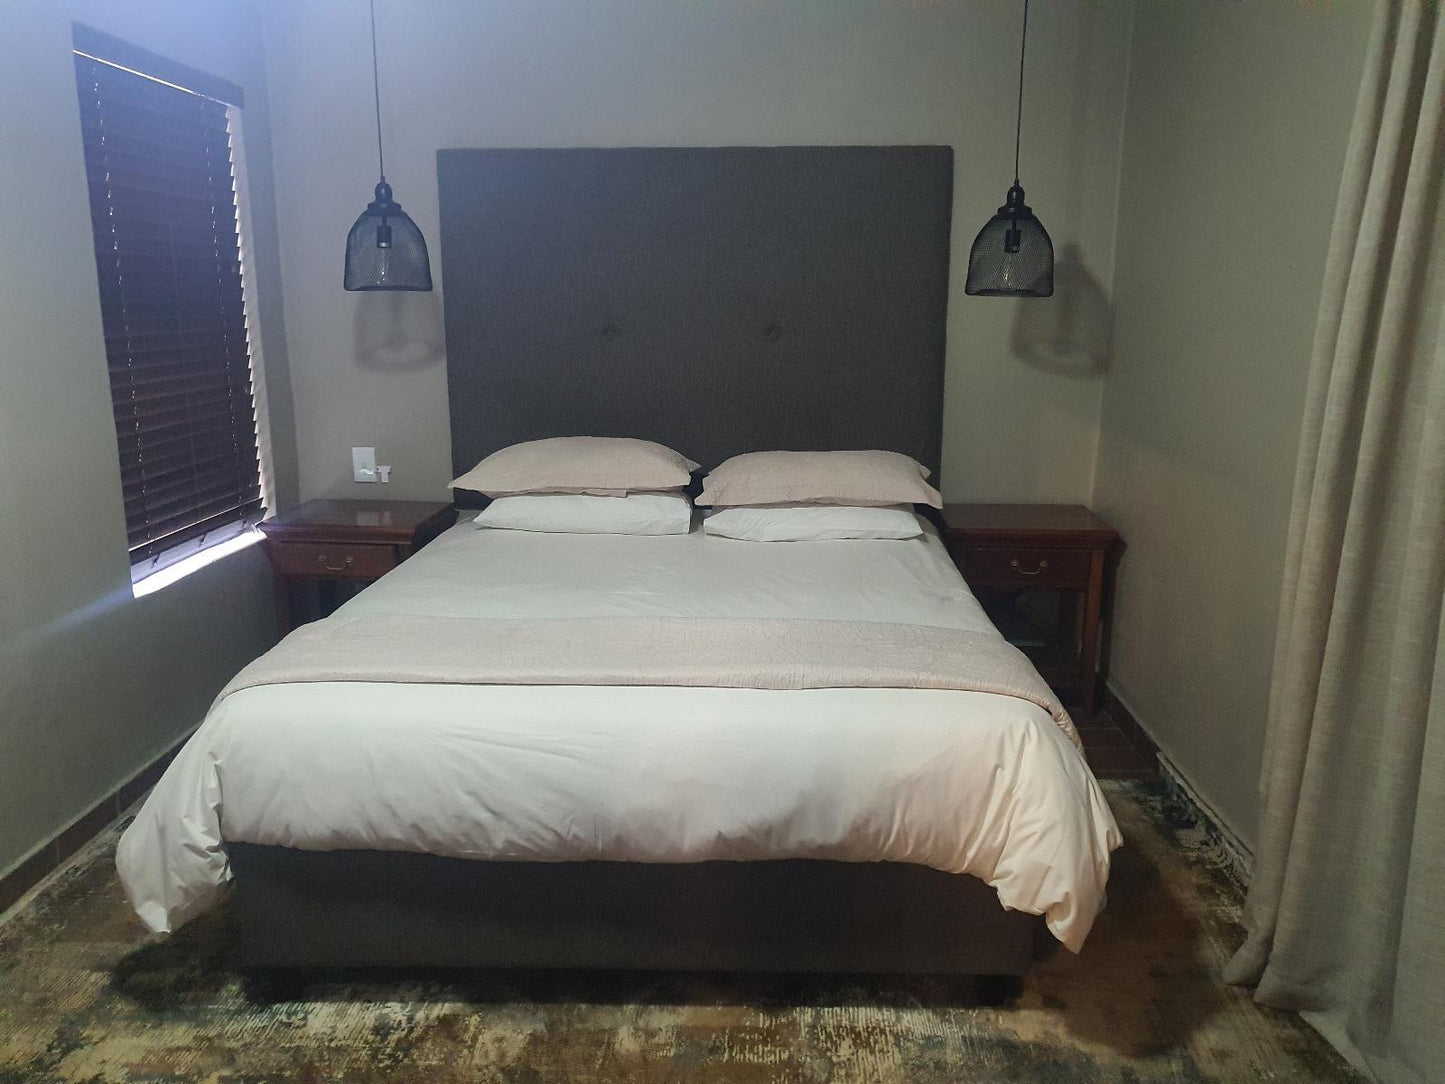 Holiday Chalet 1 Bedroom Room 13 @ Fairview Hotels, Spa & Golf Resort